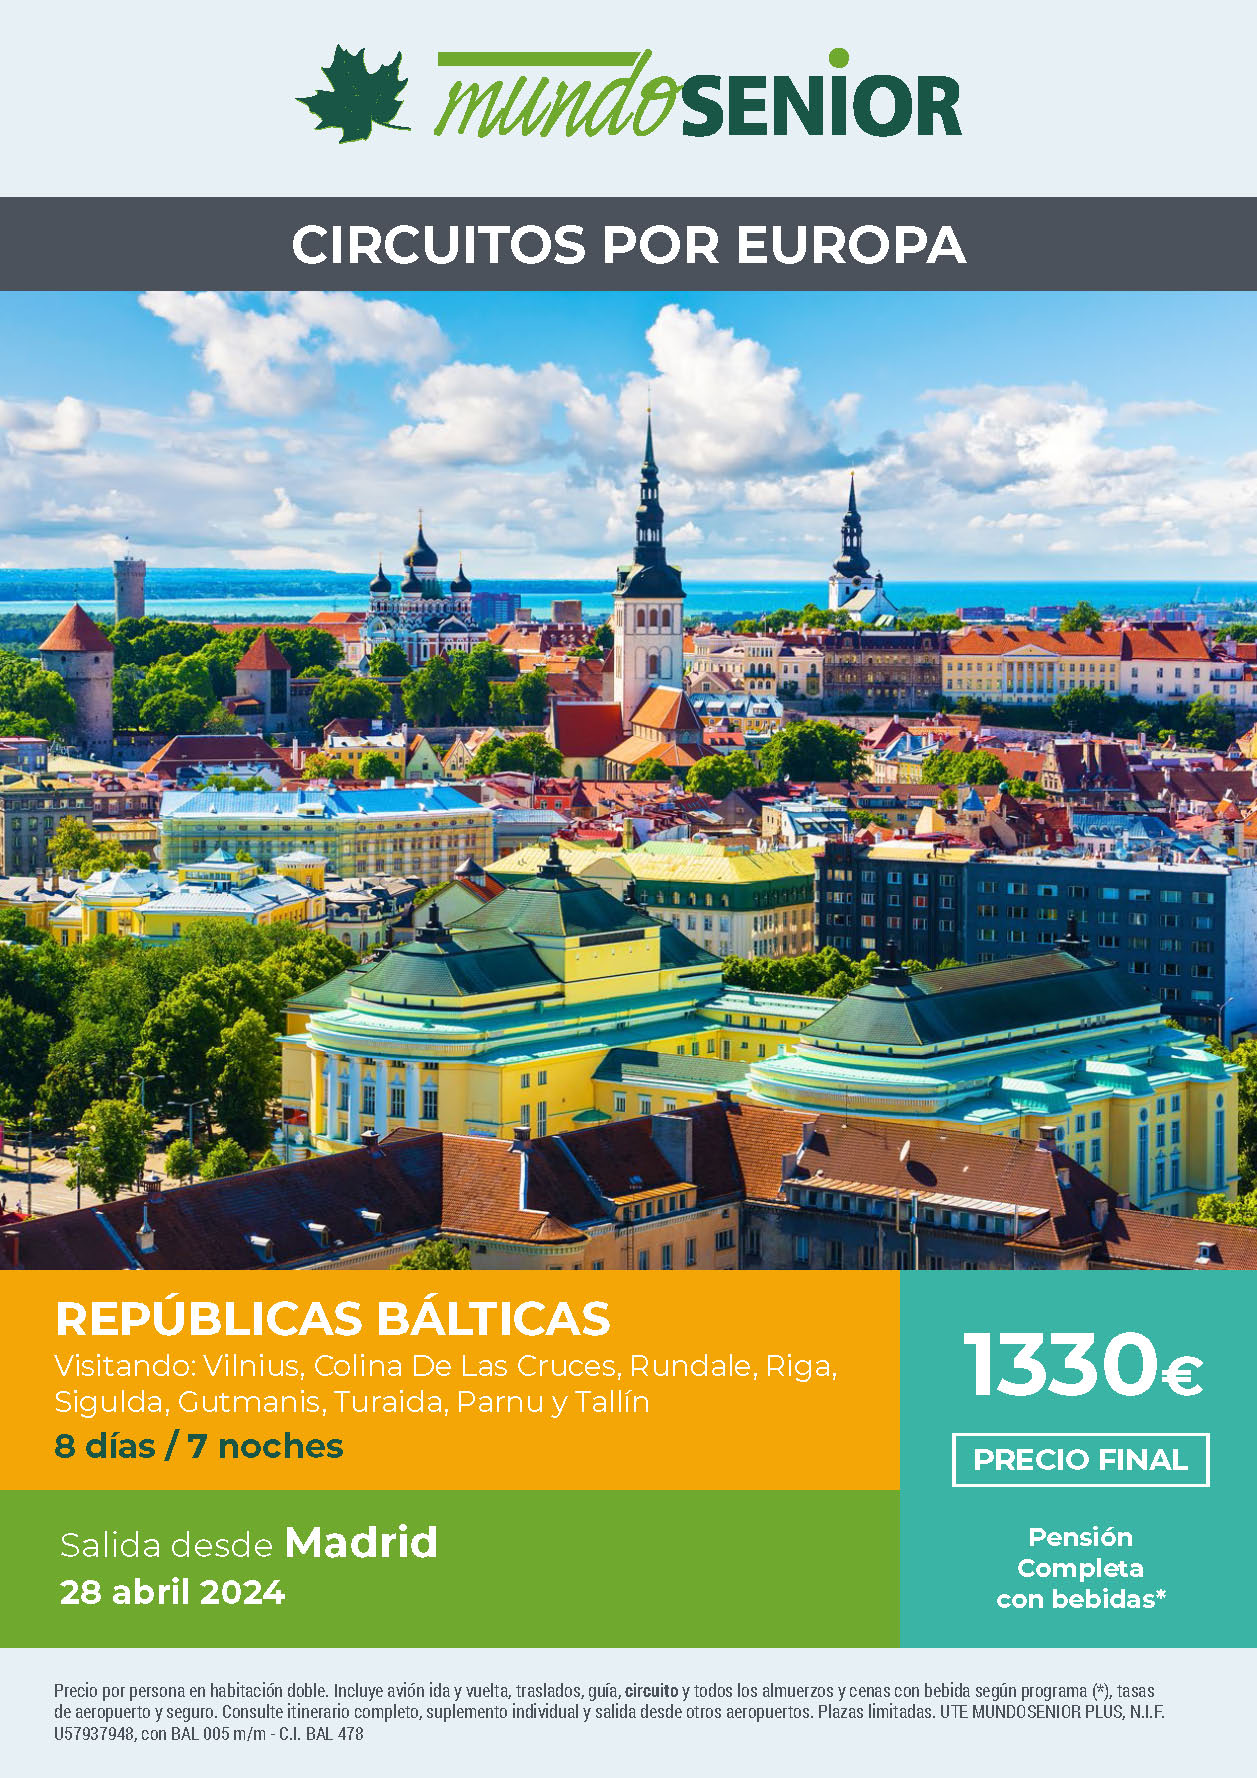 Oferta Mundo Senior circuito Republicas Balticas 8 dias pension completa salida 28 abril 2024 en vuelo directo desde Madrid